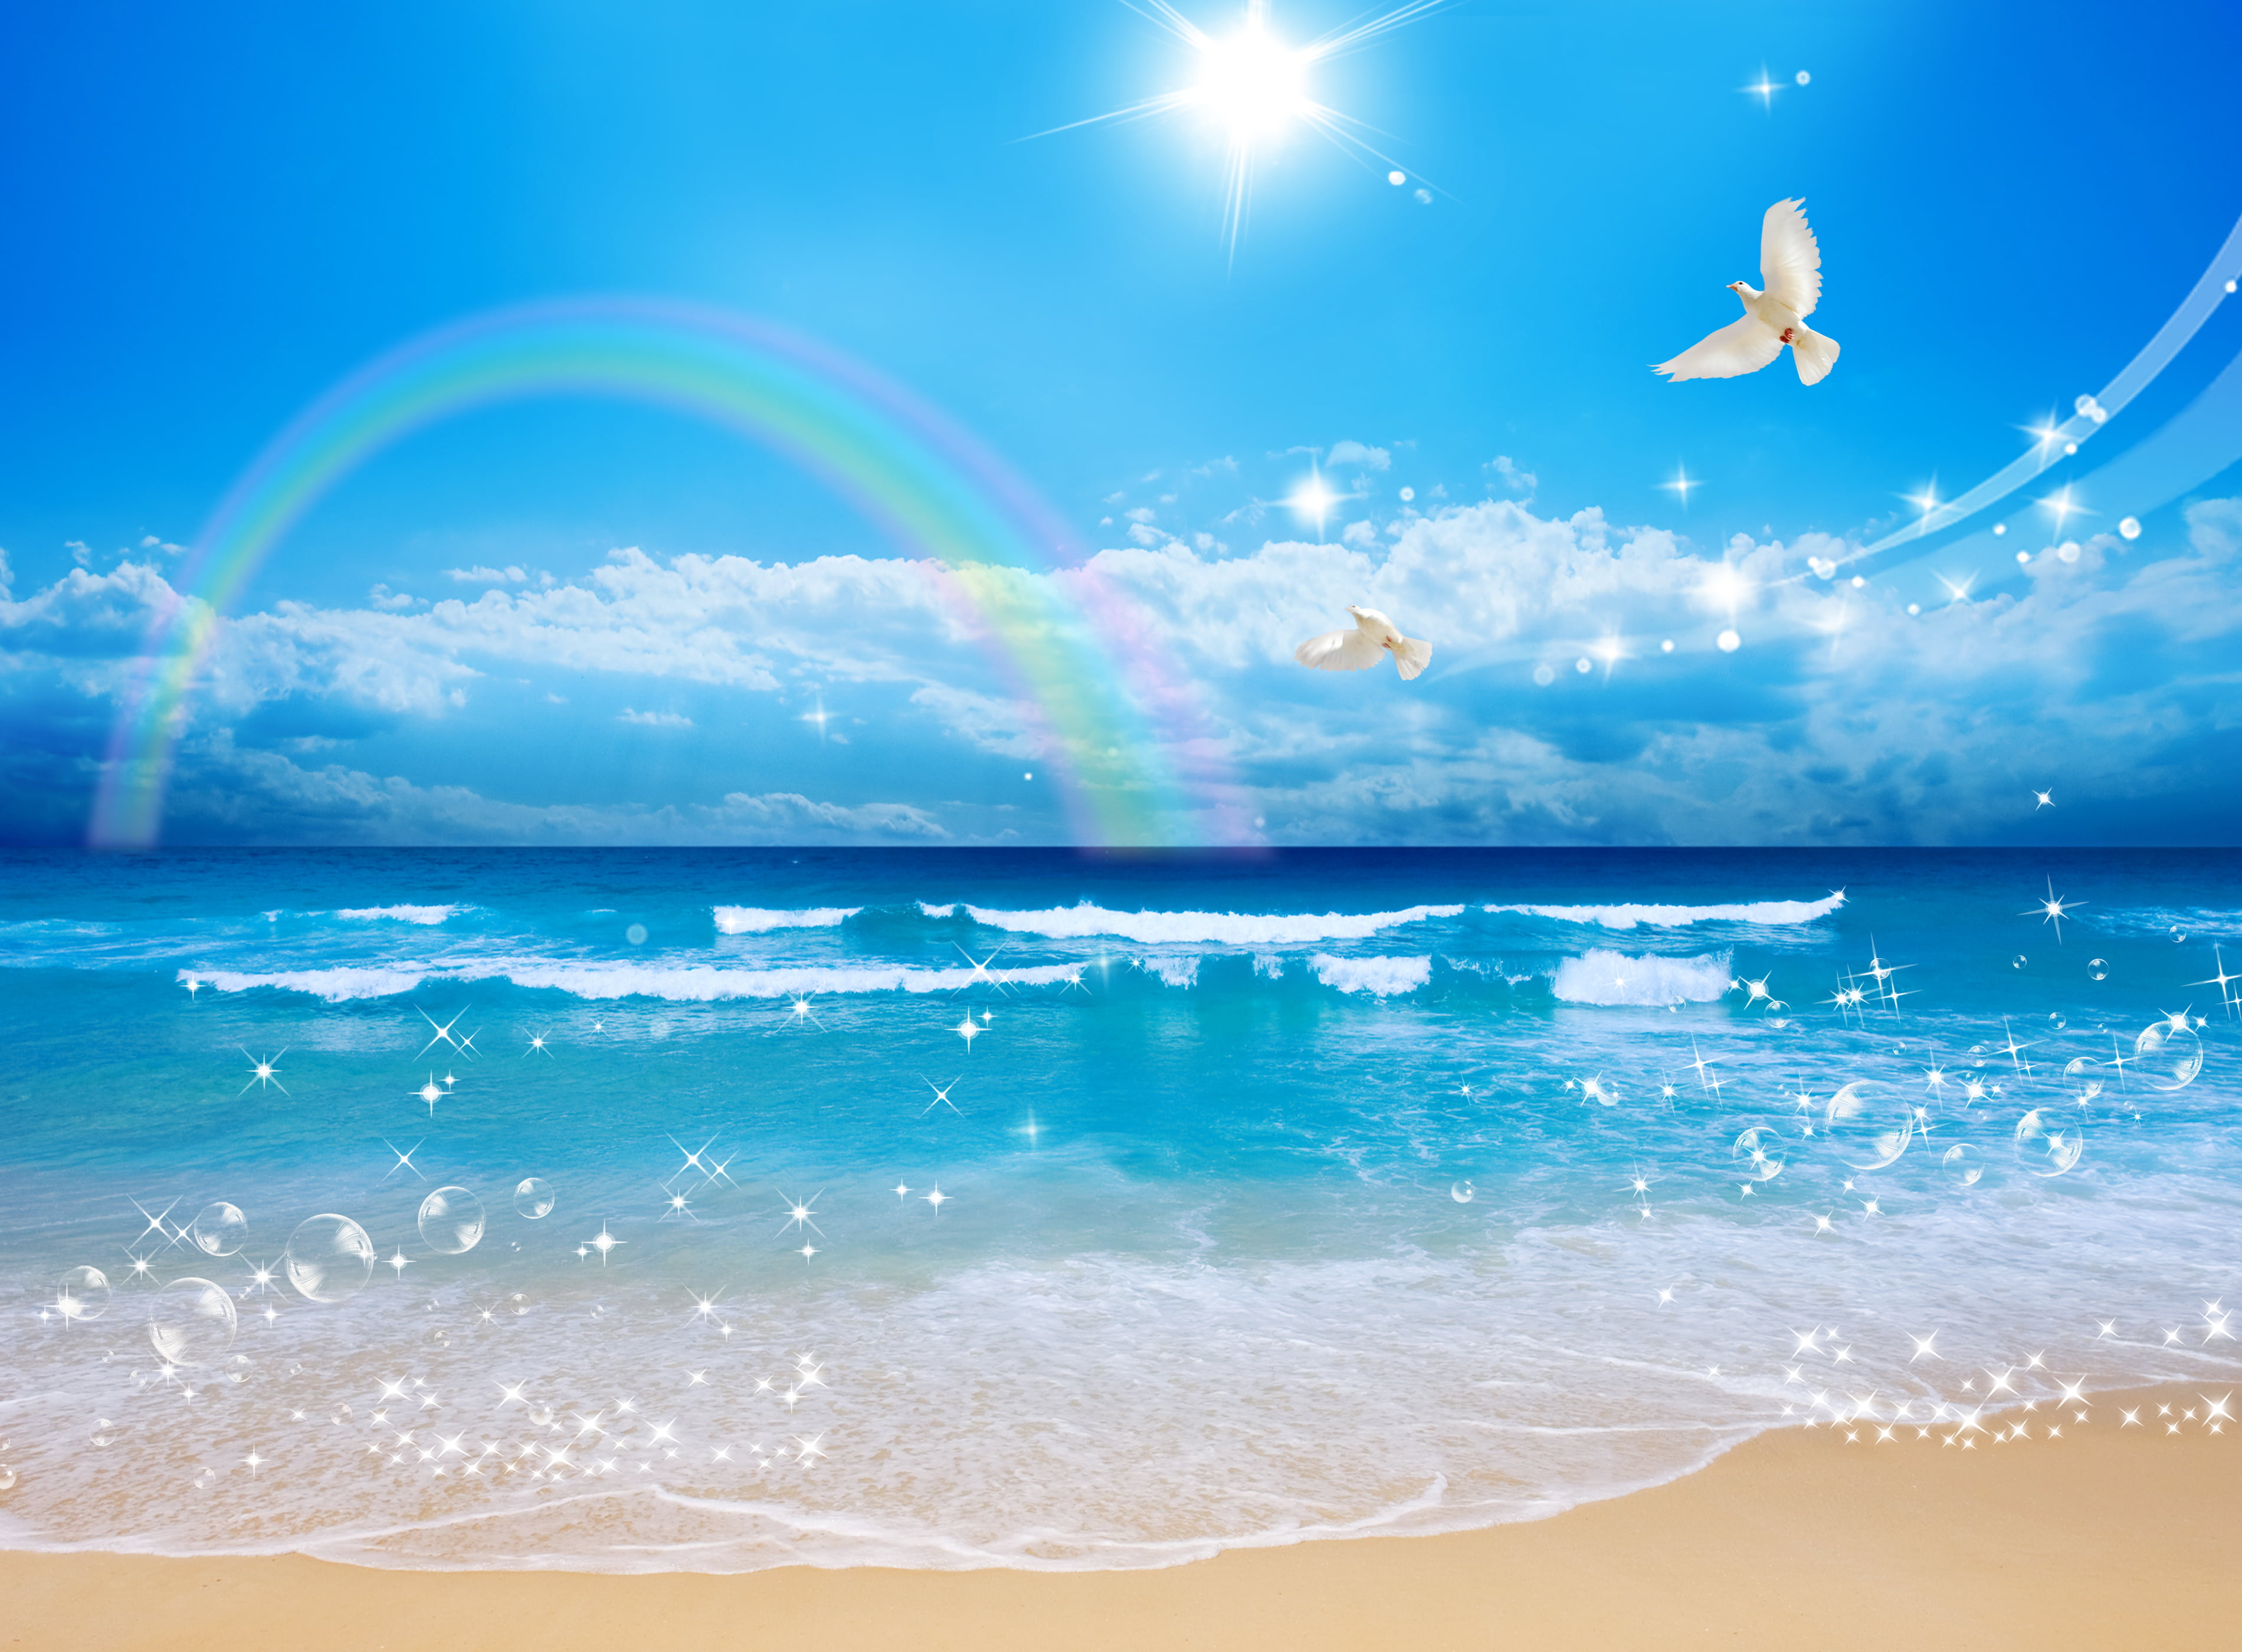 white birds and rainbow on ocean illustration, sand, sea, wave